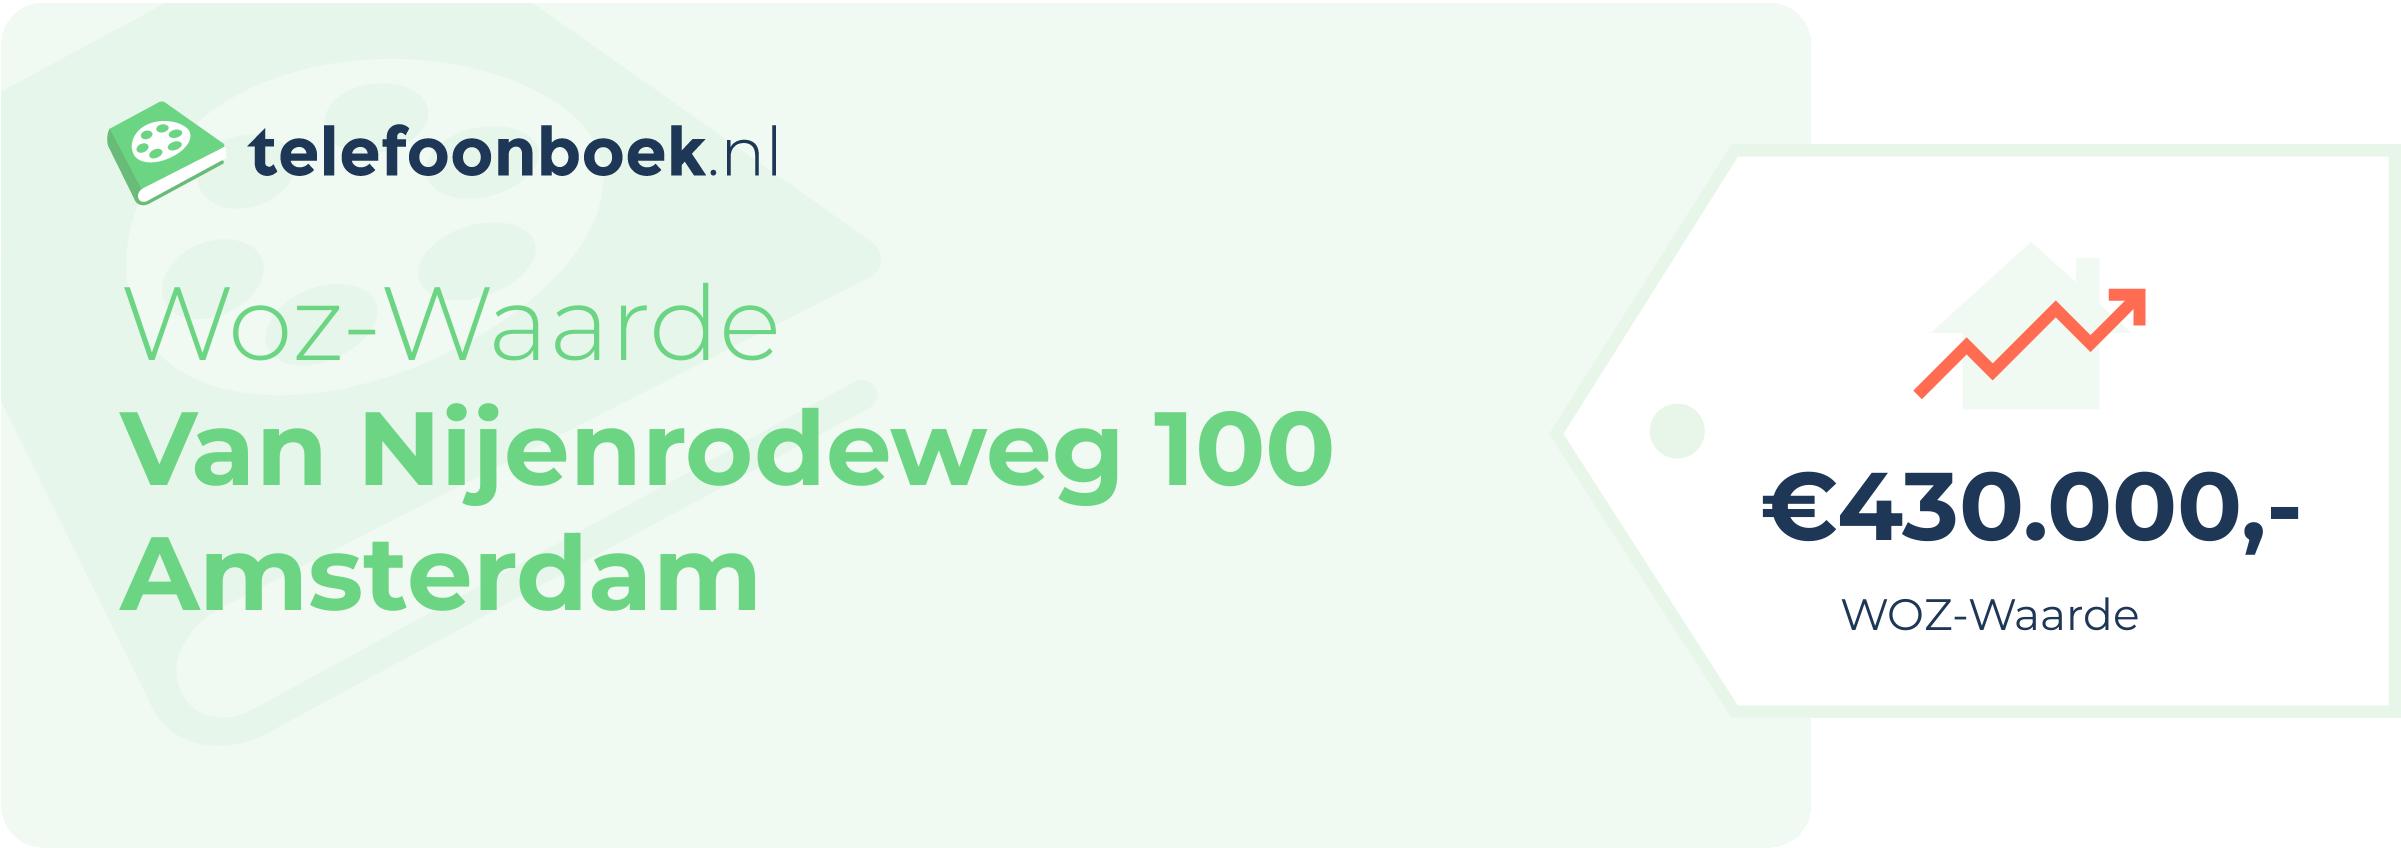 WOZ-waarde Van Nijenrodeweg 100 Amsterdam